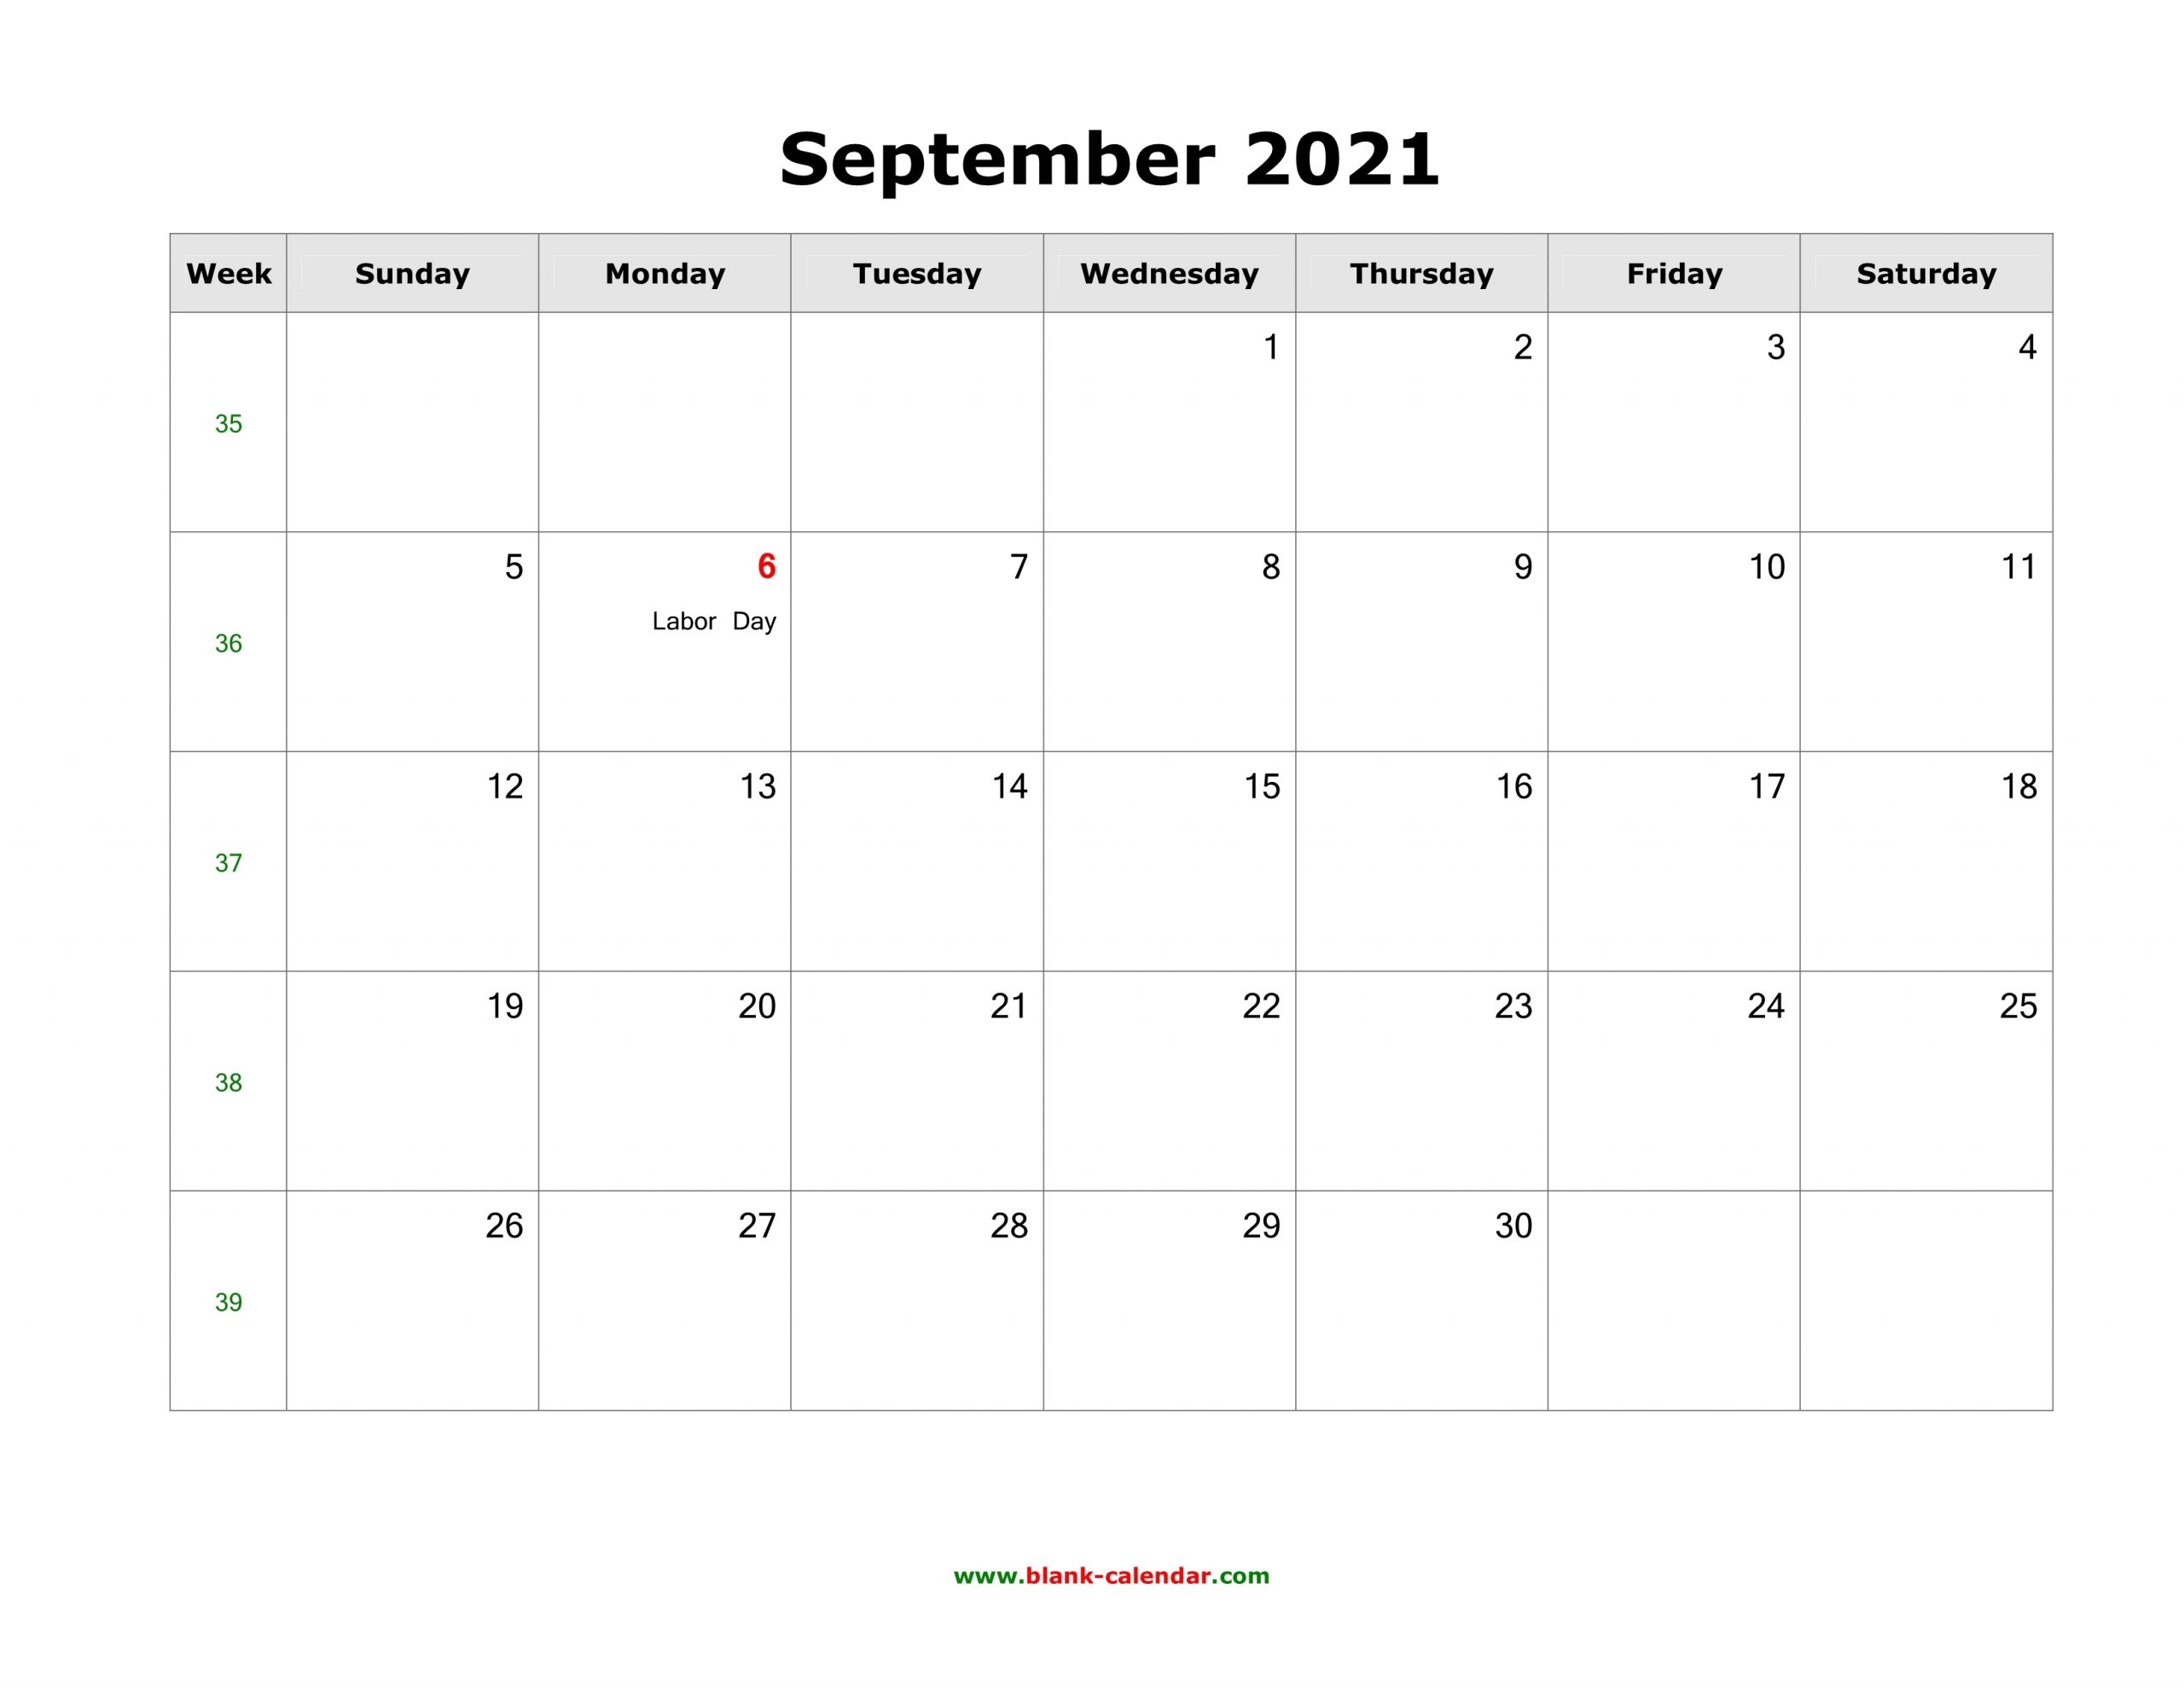 September 2021 Blank Calendar | Free Download Calendar